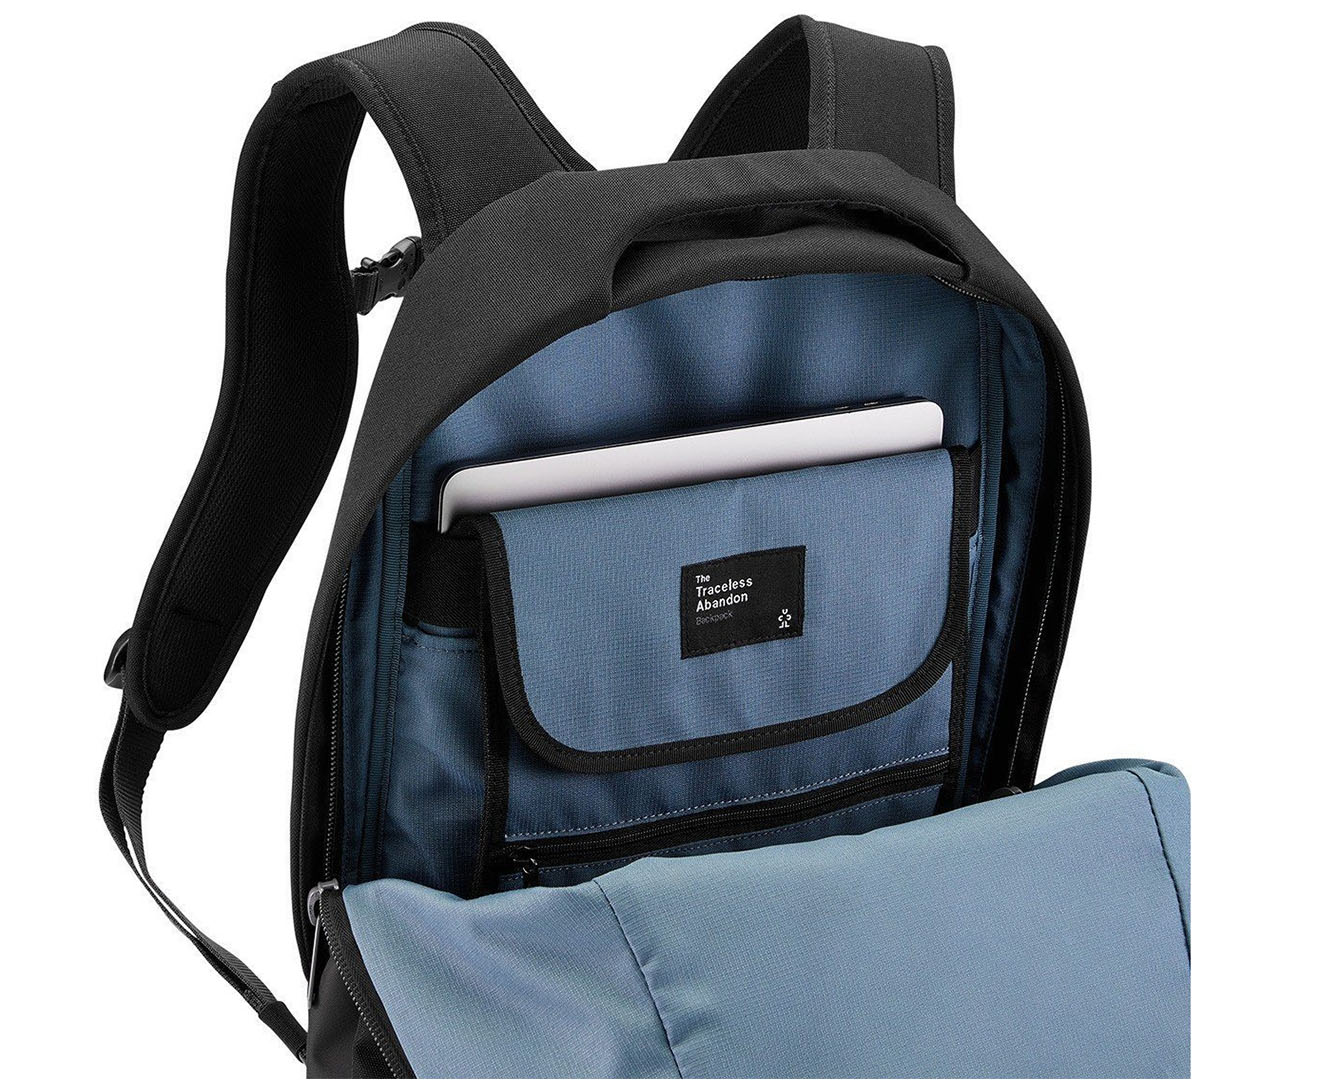 Crumpler 25L Traceless Abandon Laptop Backpack - Black | Catch.com.au